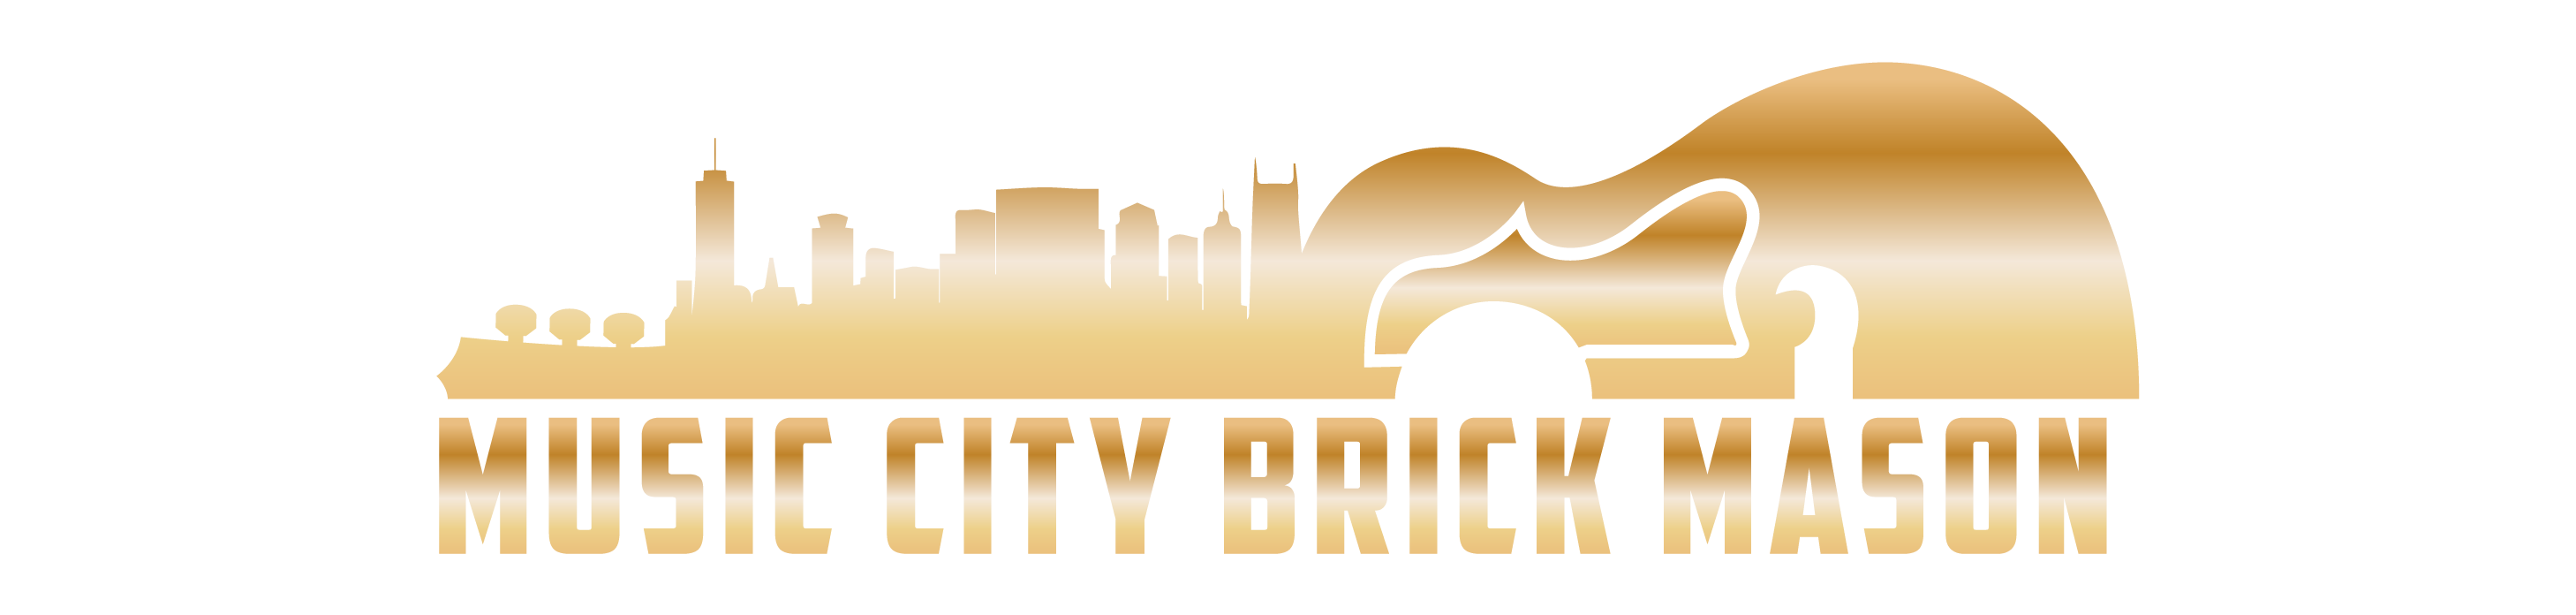 Music City Mason Brick Masonry Contractor in Nashville TN